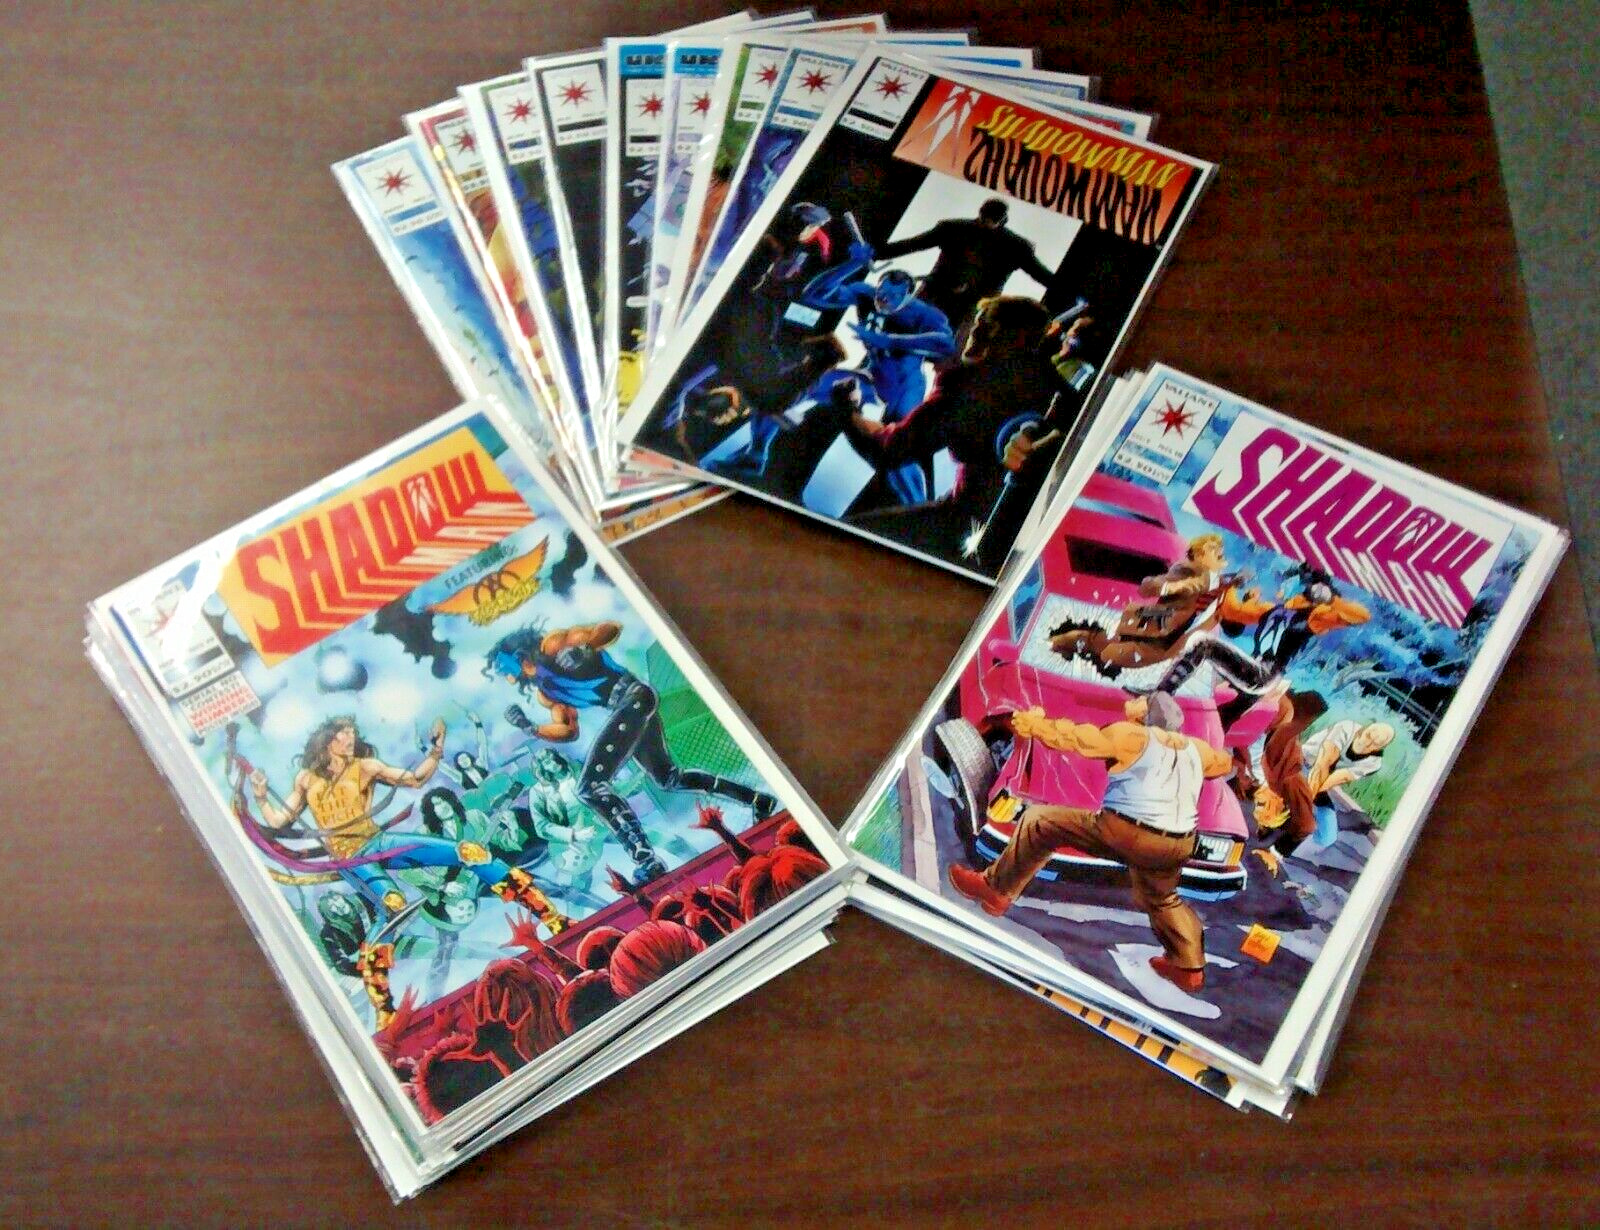 Shadowman Volume 1 Bundle #0-33 (34 books) 1994/\'95 VF+ or better